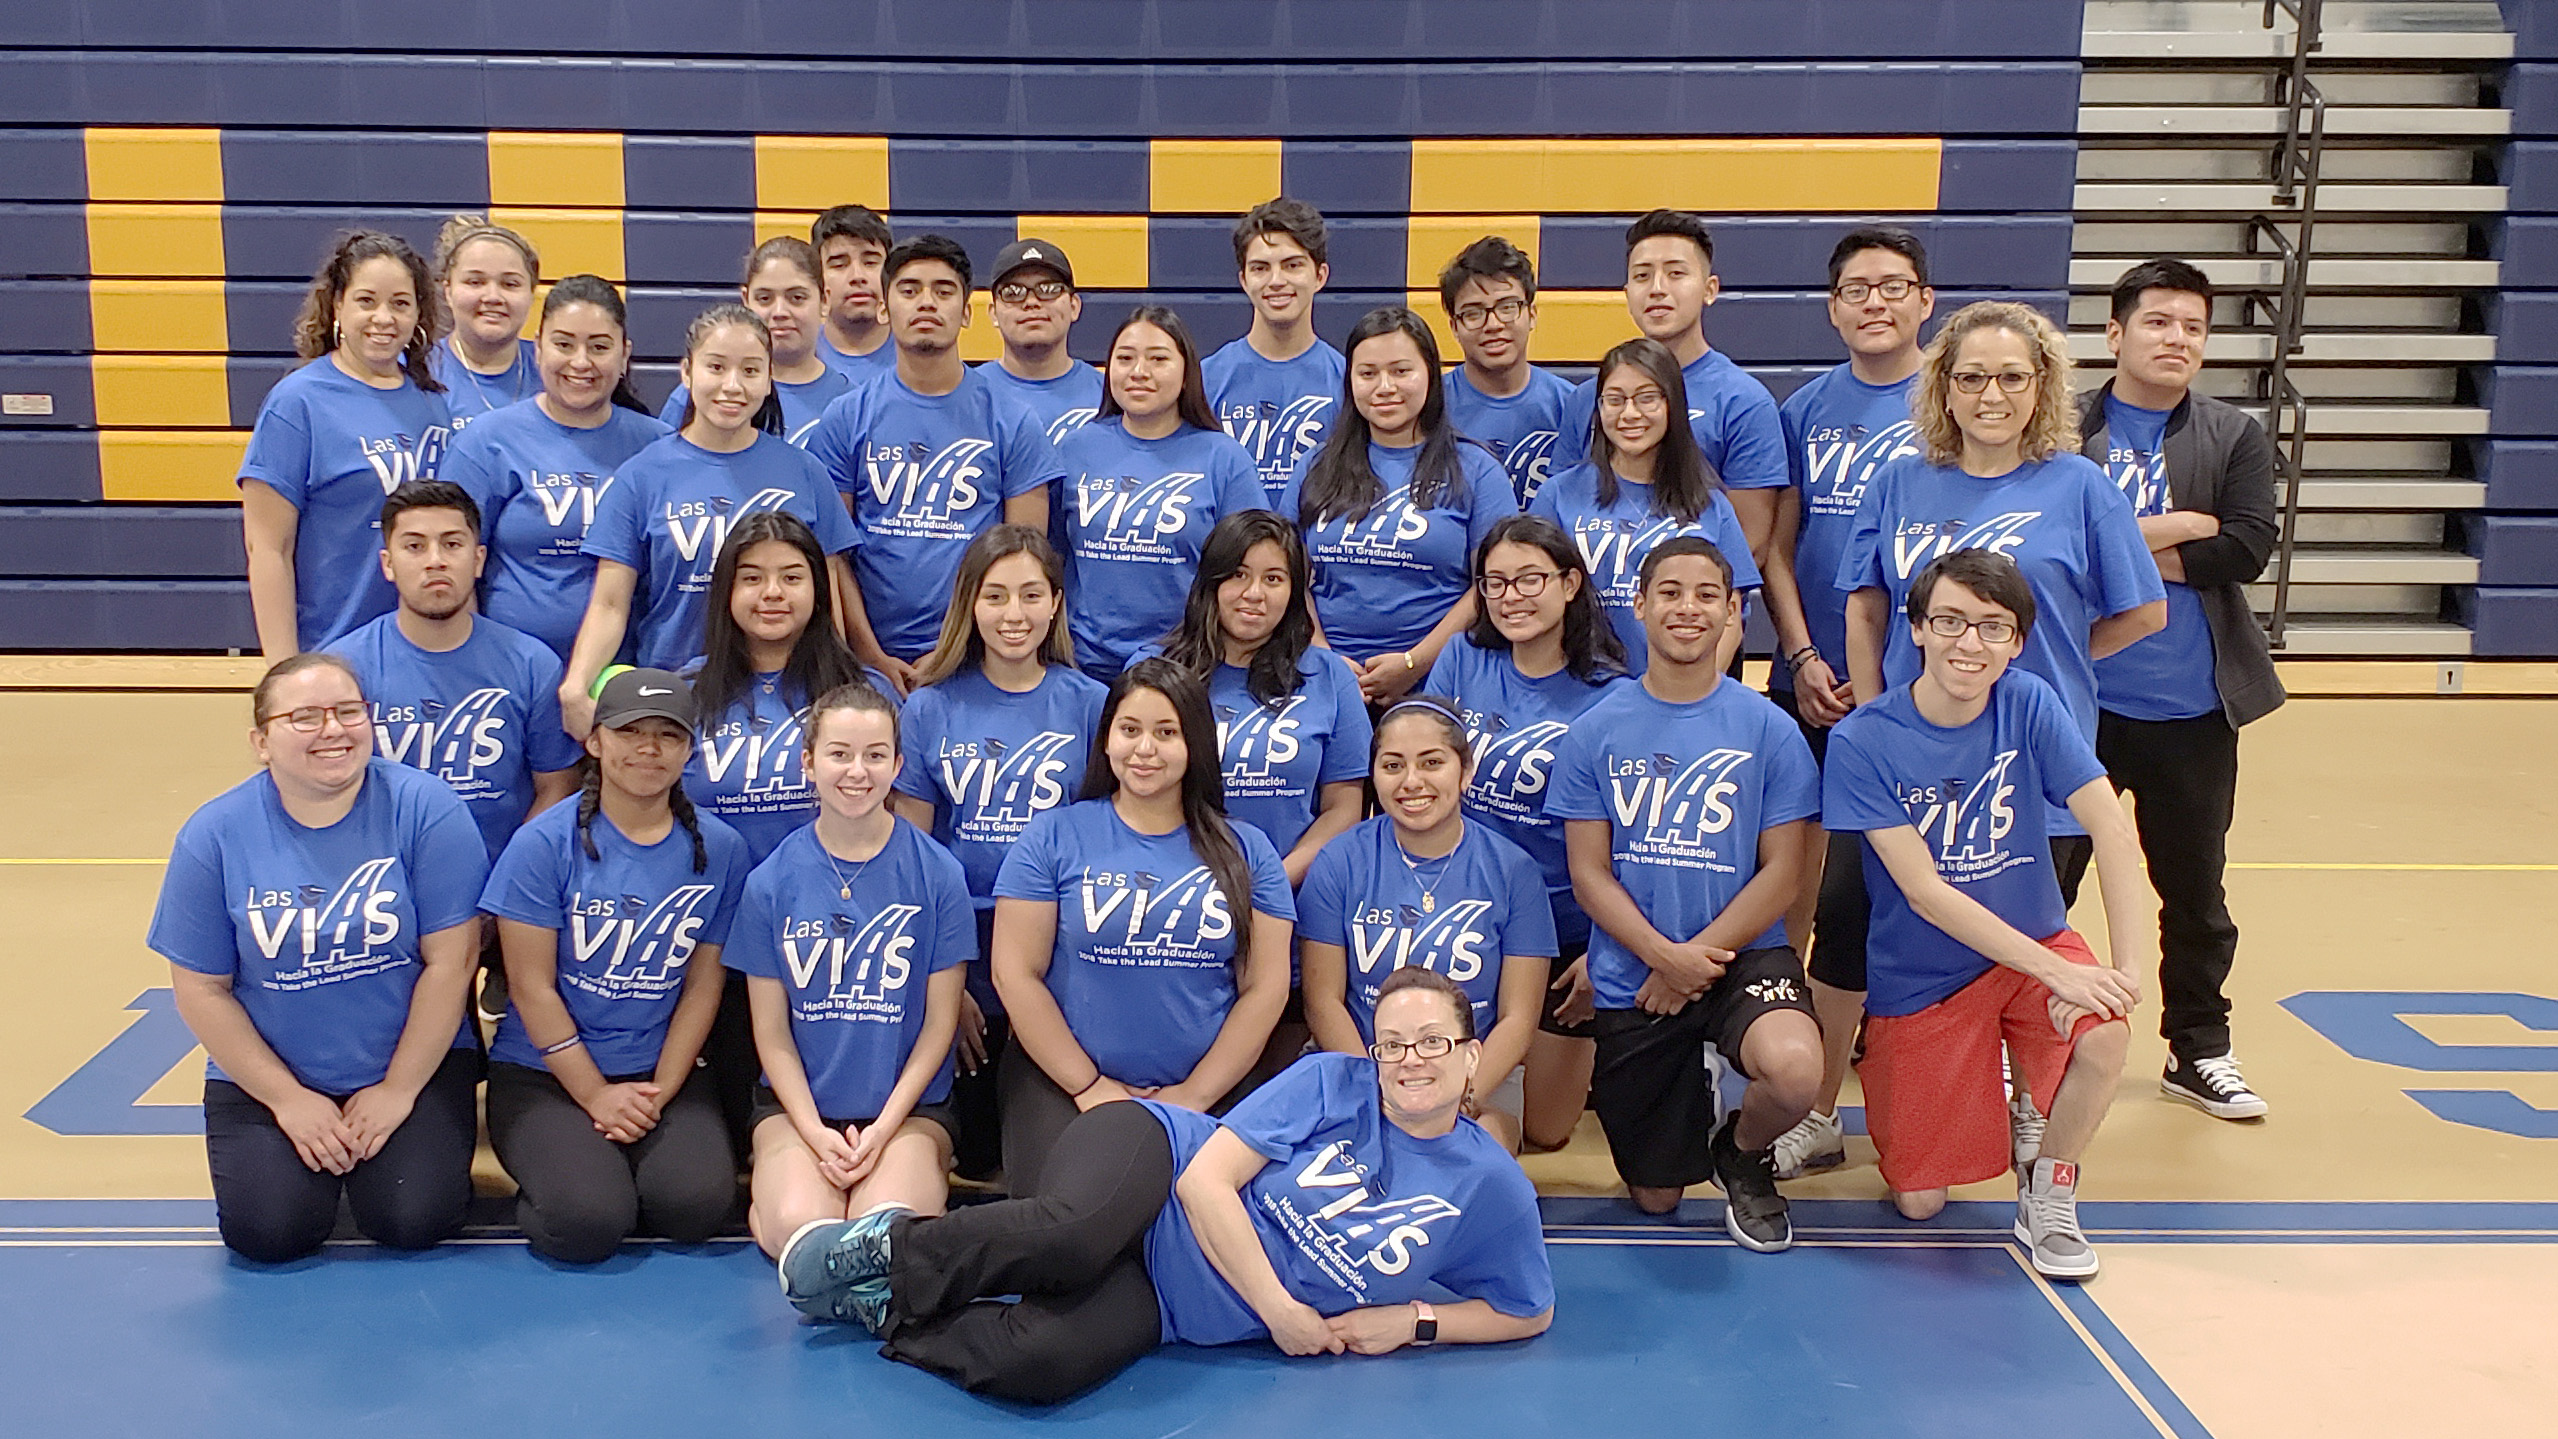 Group photo of 2018 Las Vias students